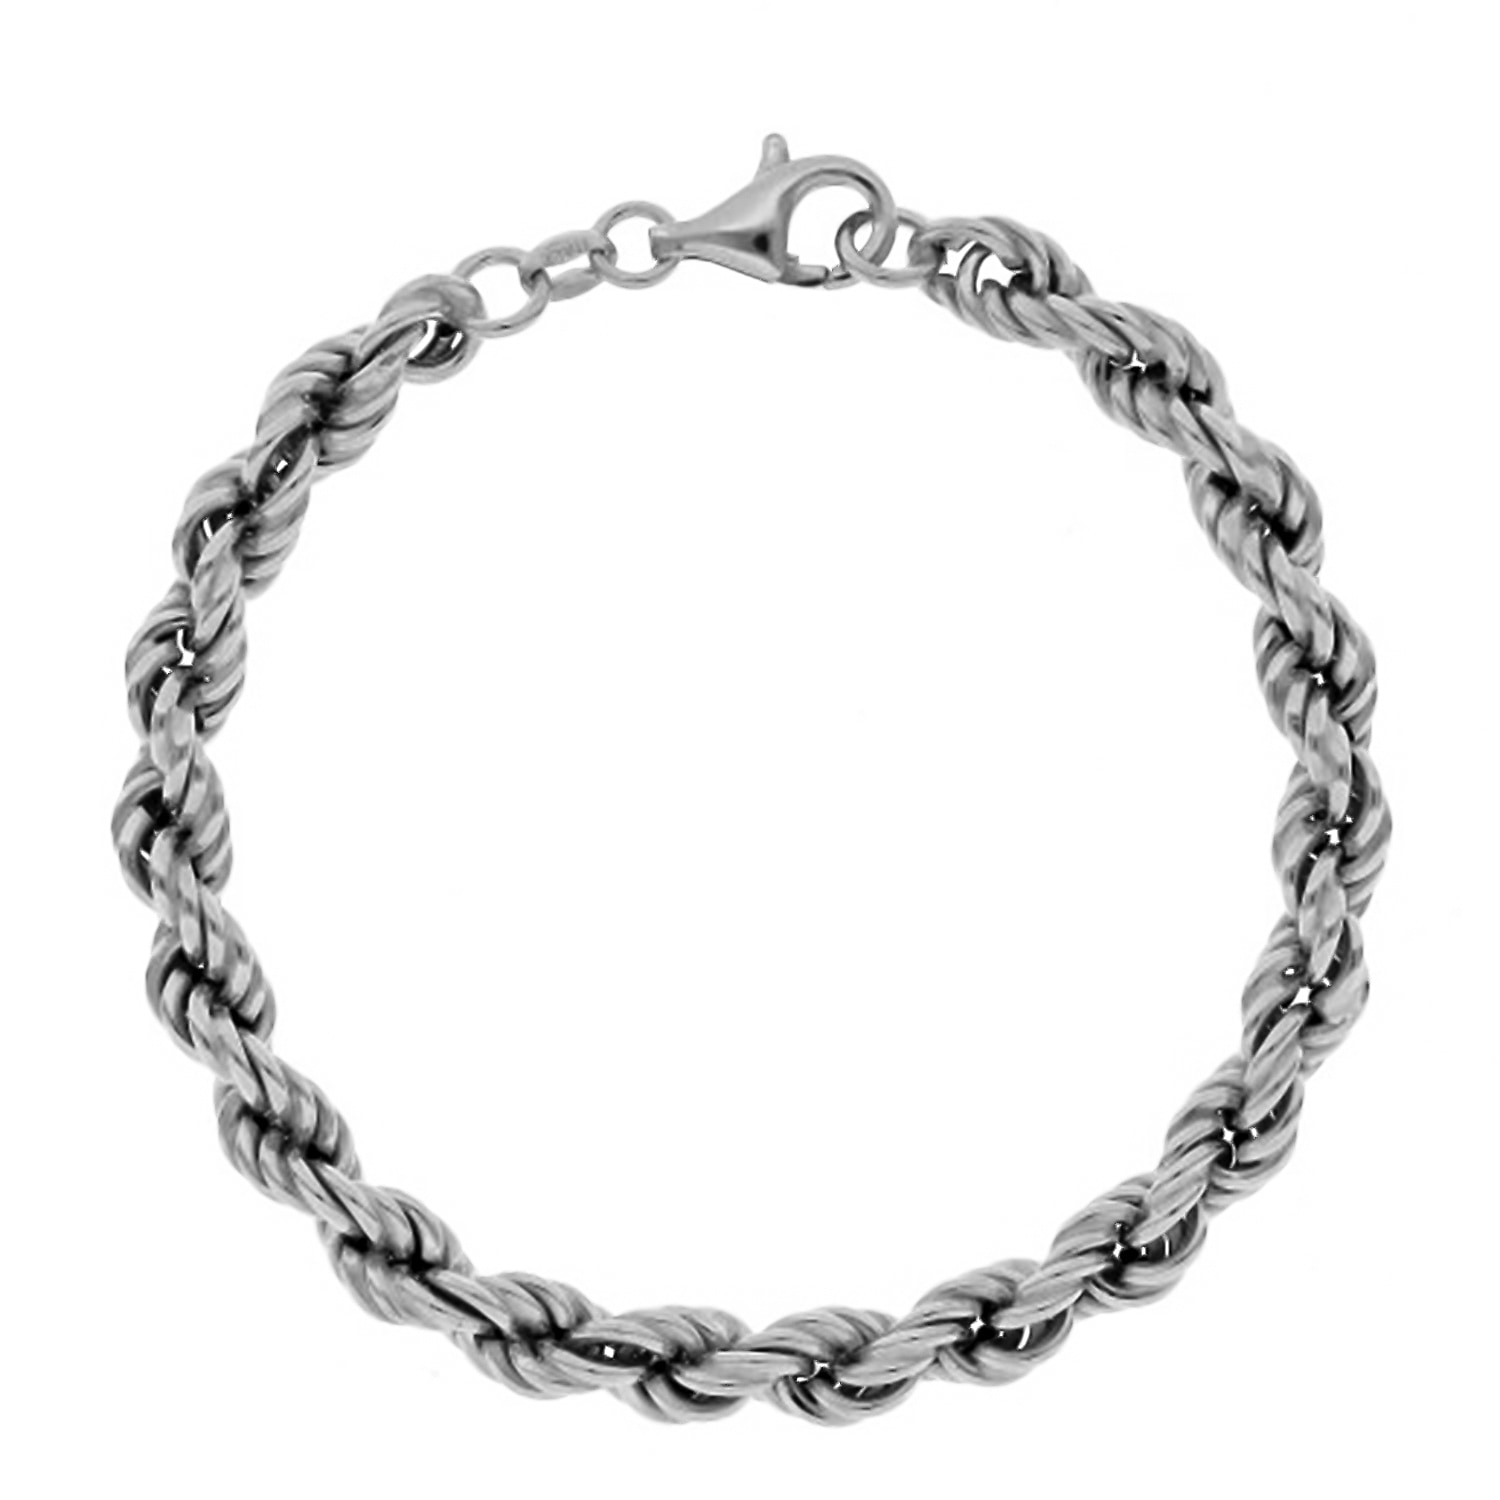 La bella collection- Sterling Silver Rope Bracelet (Size - 7.5)